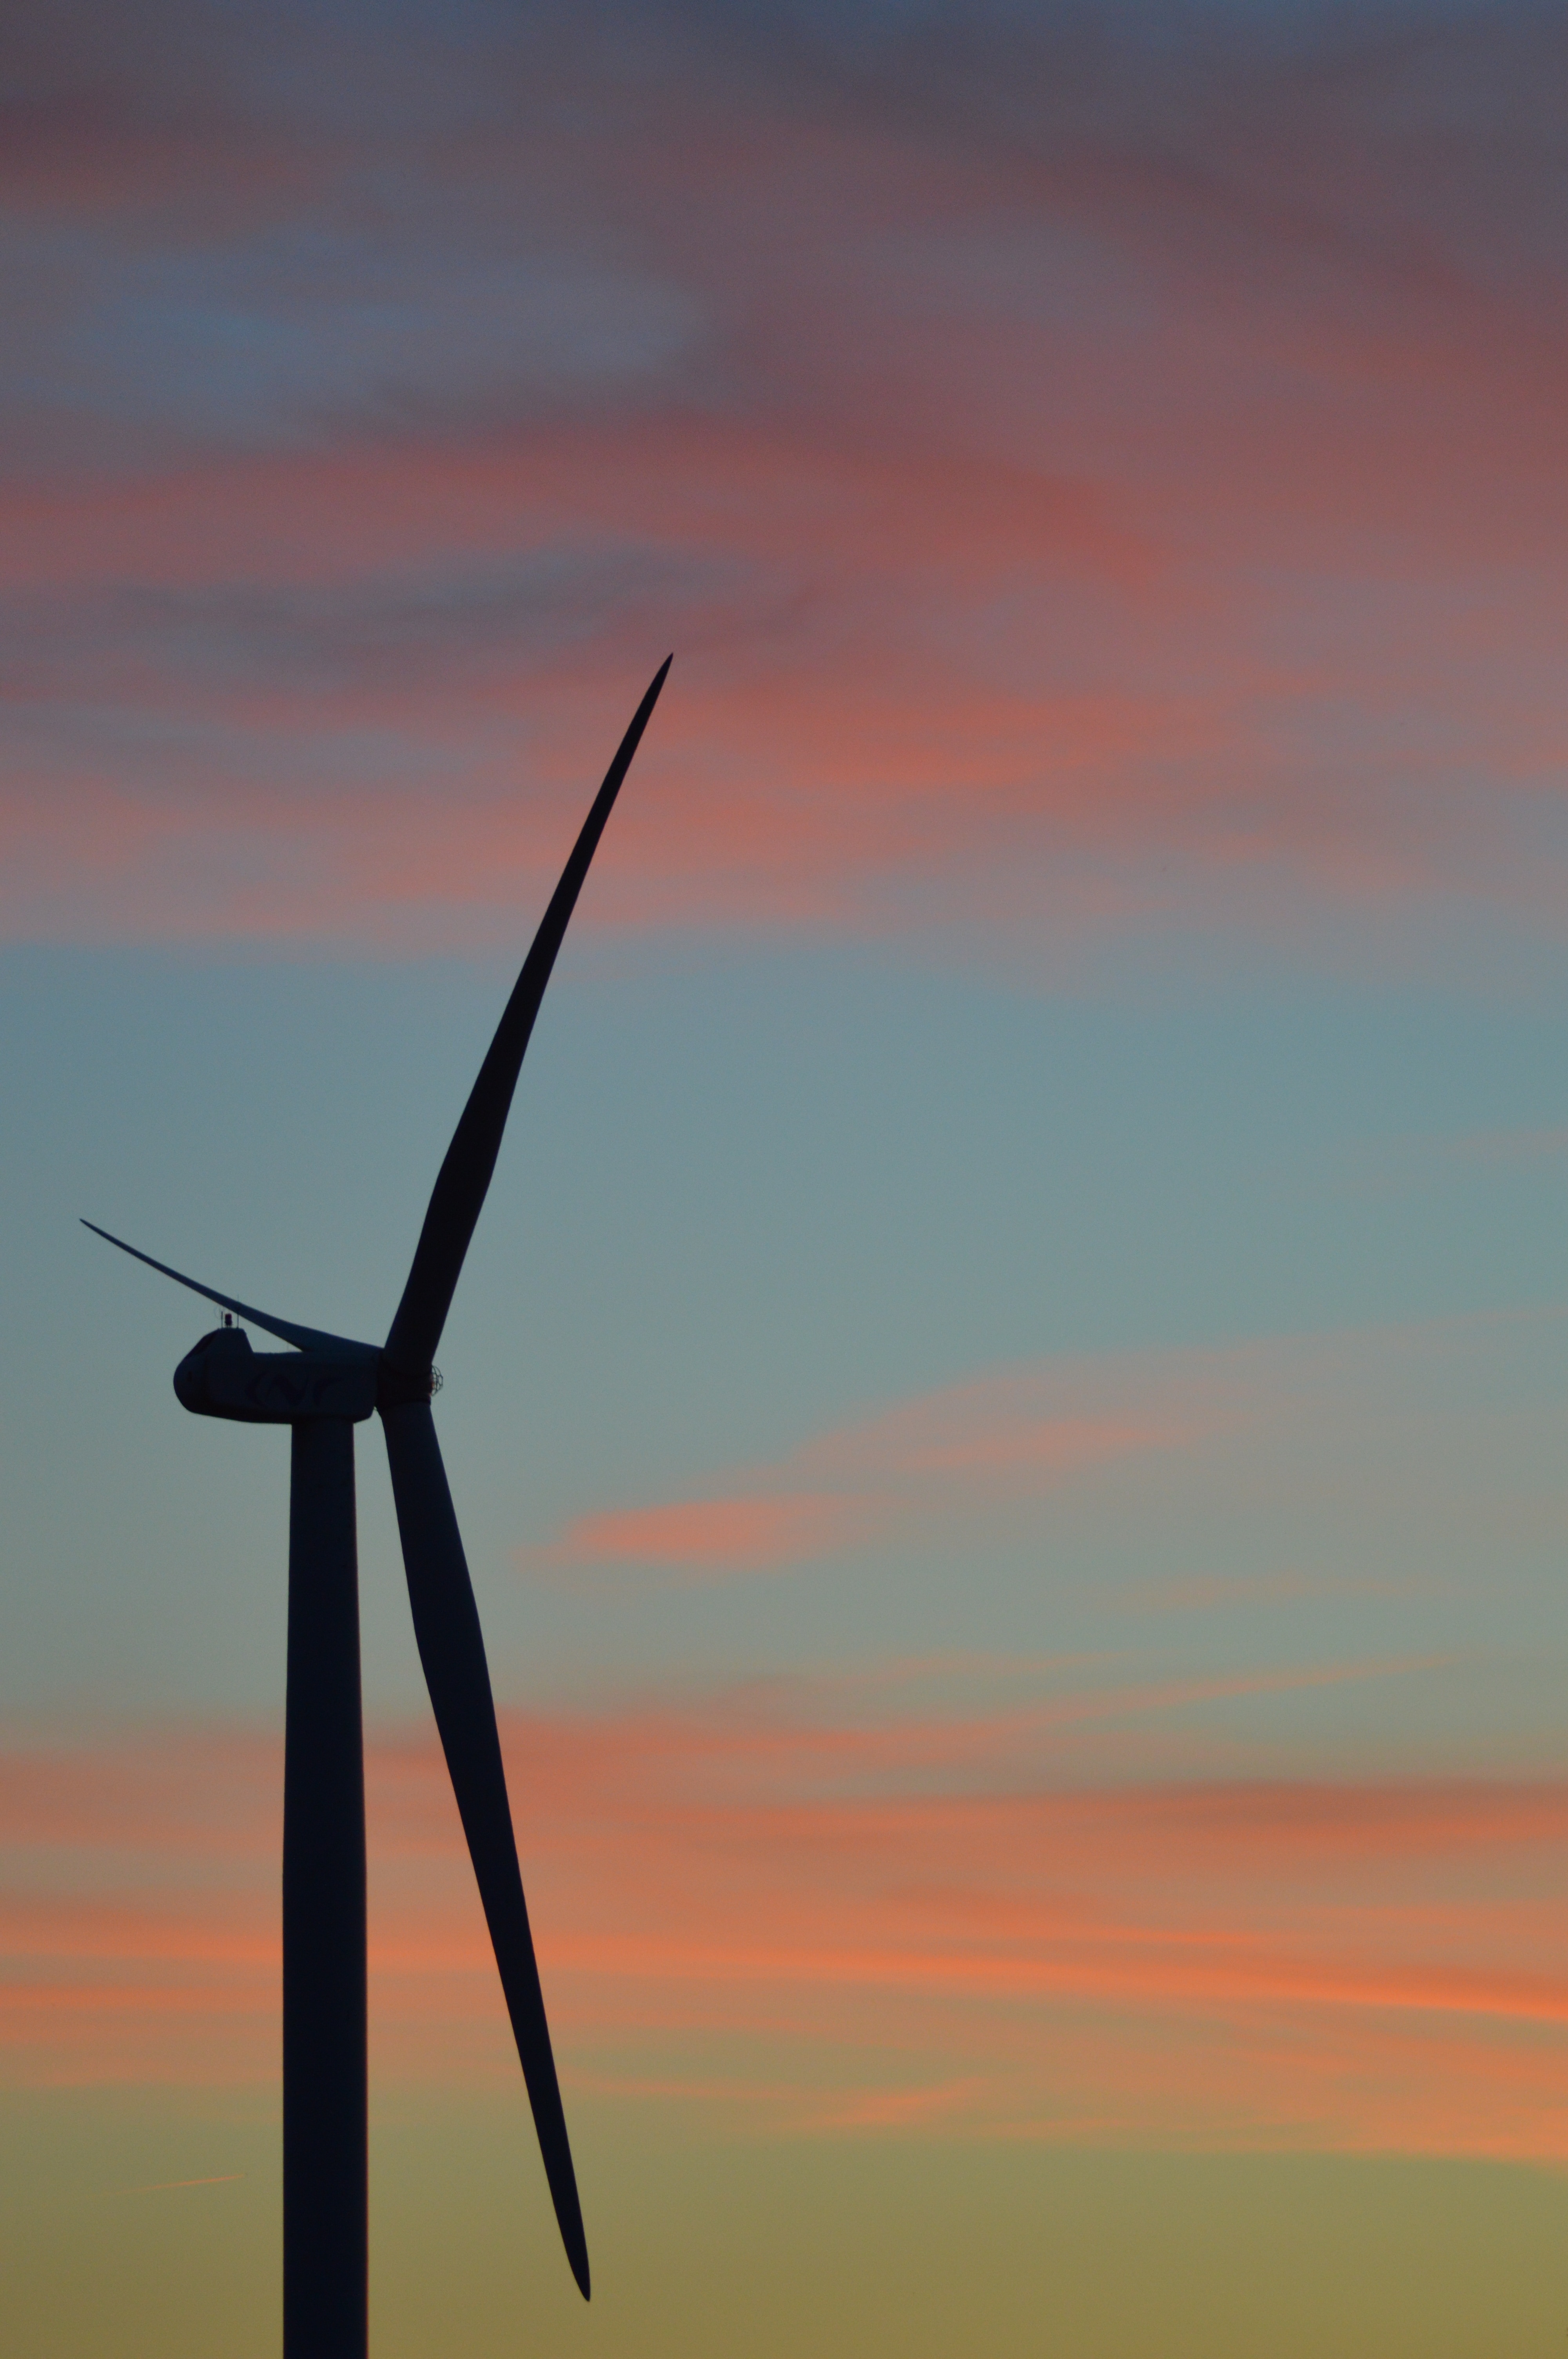 Sunset, Sky, Wind Turbine, wind power, environmental conservation